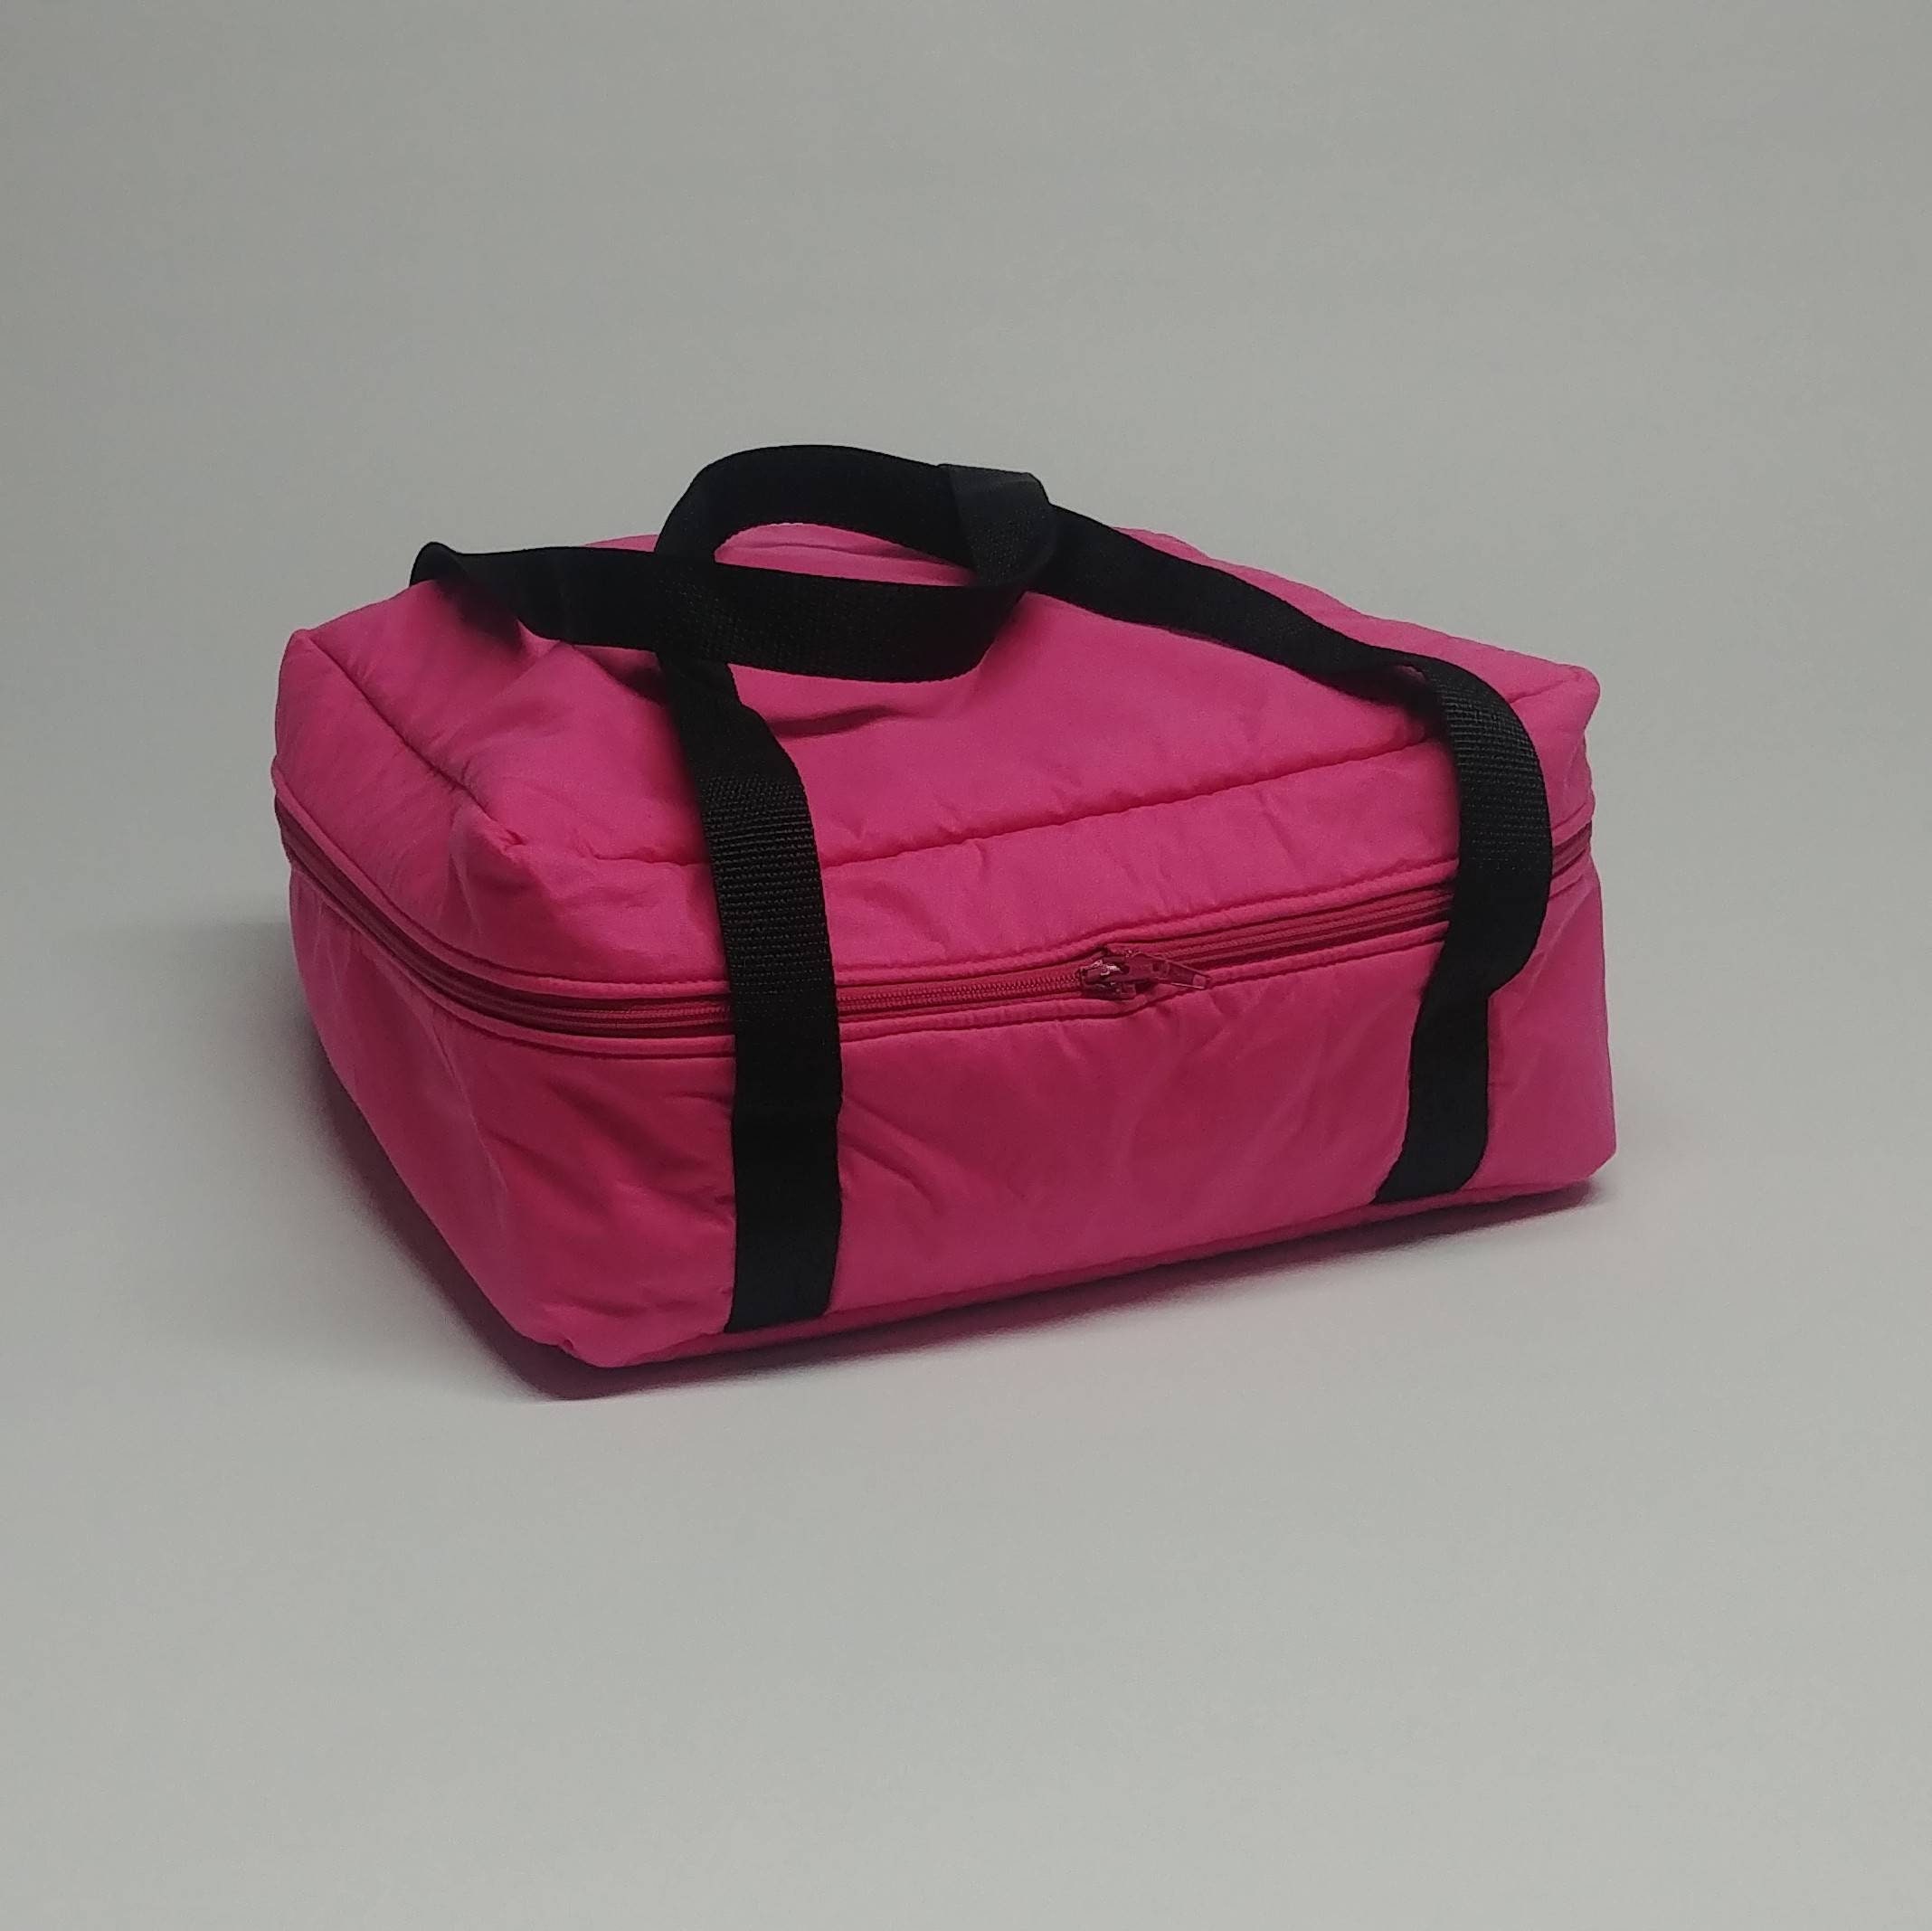 XANAD EVA Hard Case for Cricut Joy Machine Compact and Portable DIY Machine  Travel Protective Carrying Storage Bag